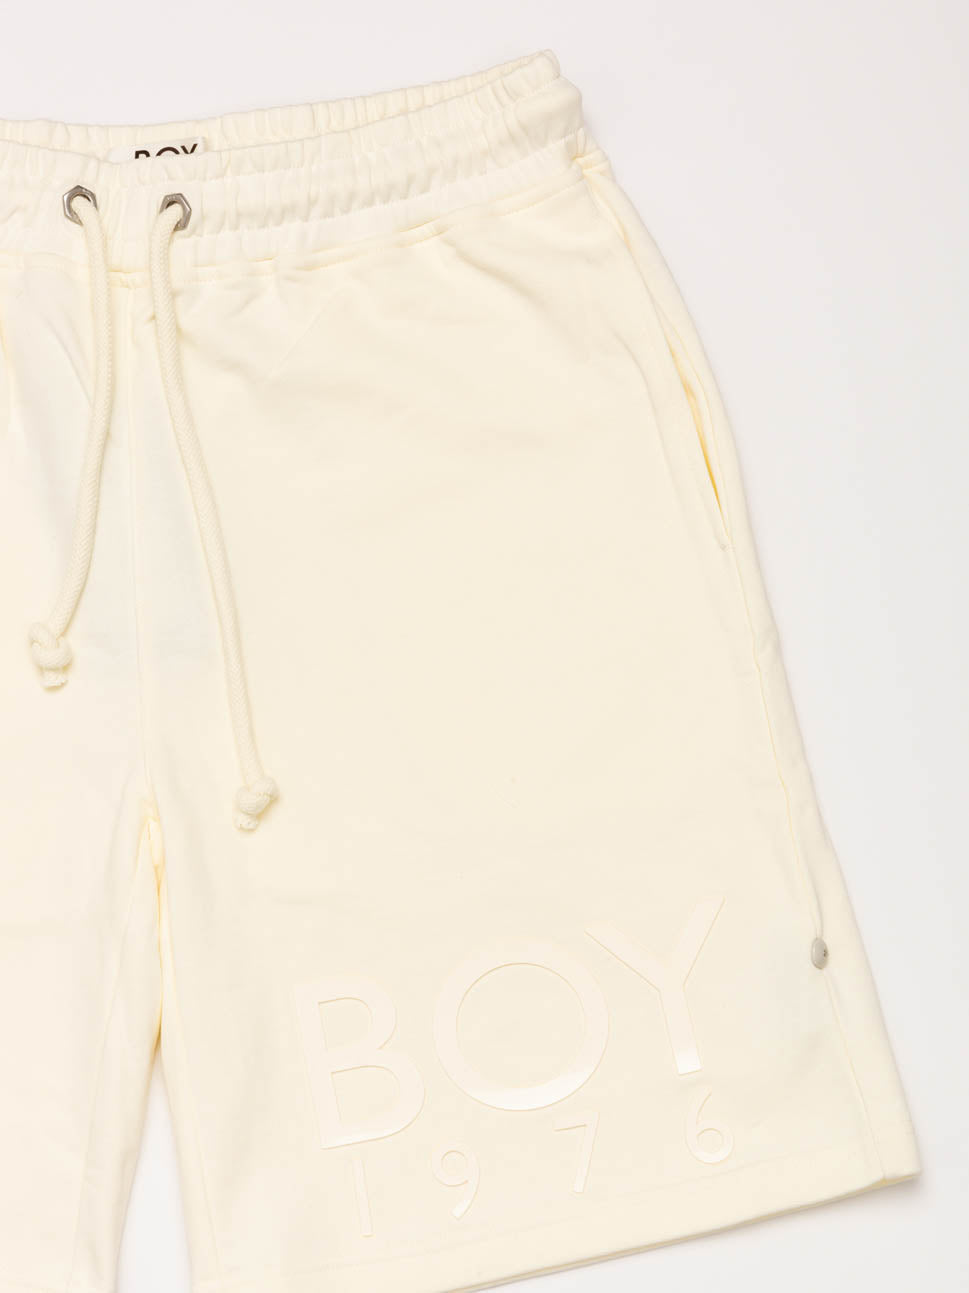 Boy London 1976 Shorts Off White